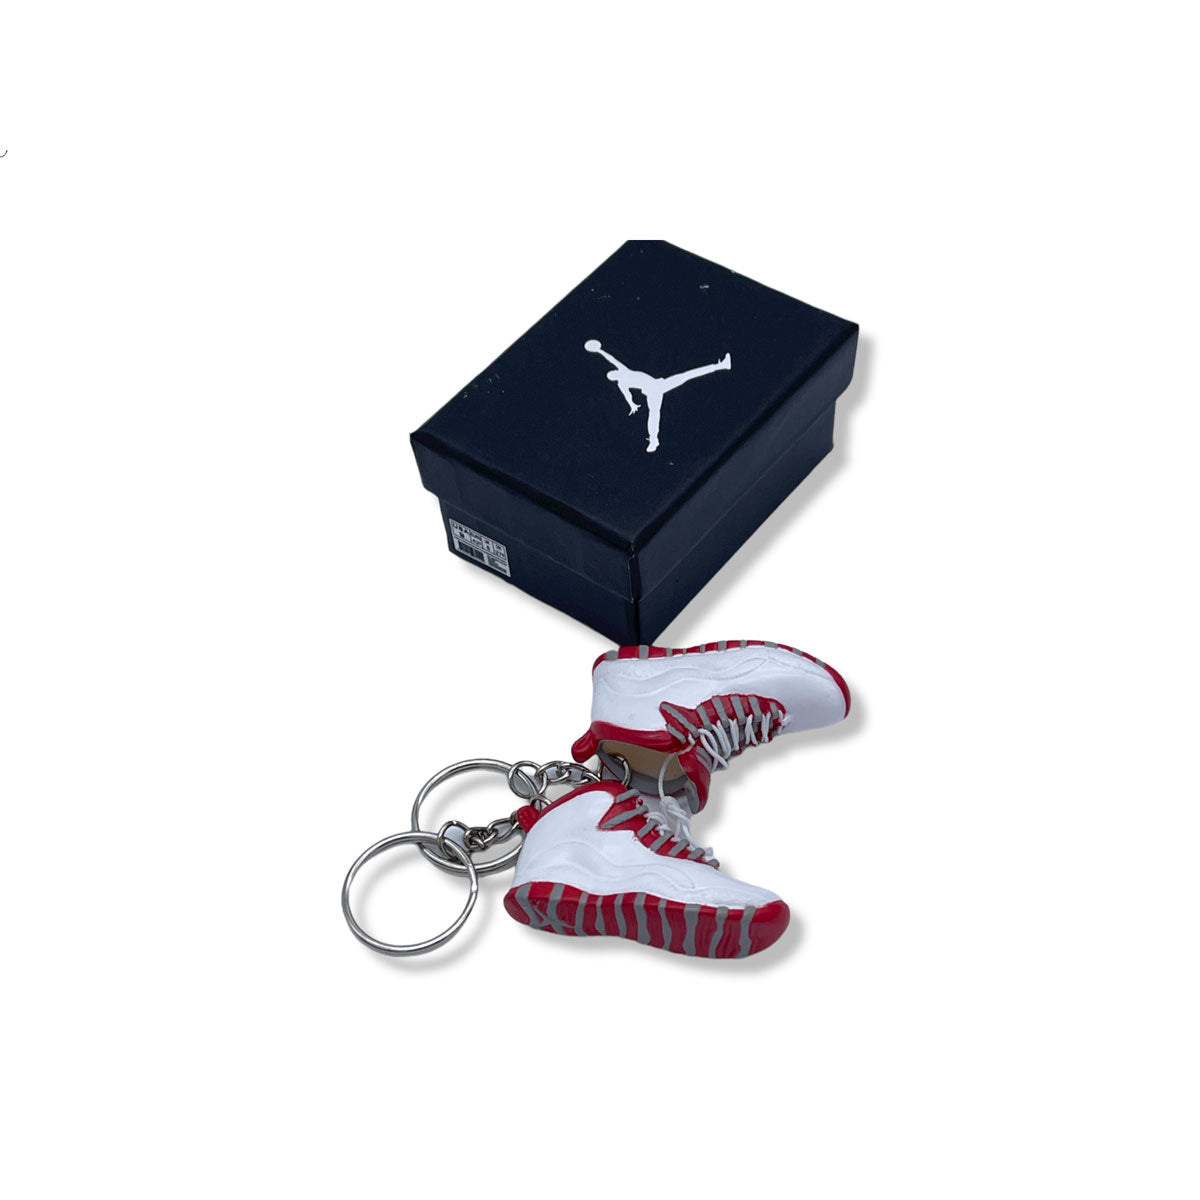 3D Sneaker Keychain- Air Jordan 10 Gym Red Pair